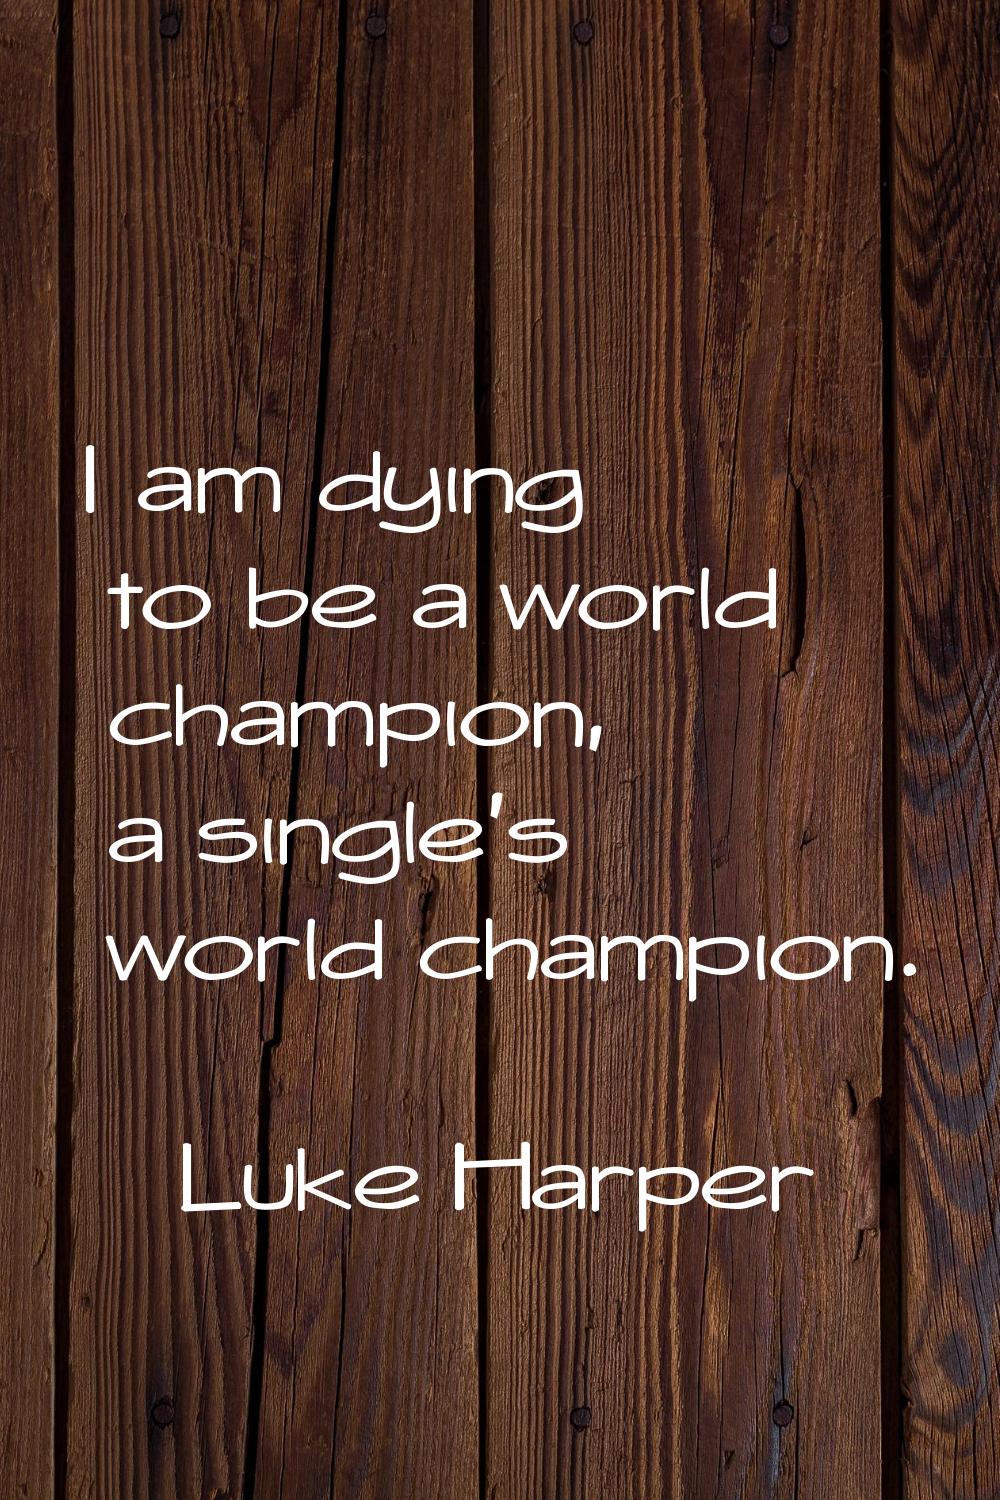 I am dying to be a world champion, a single's world champion.